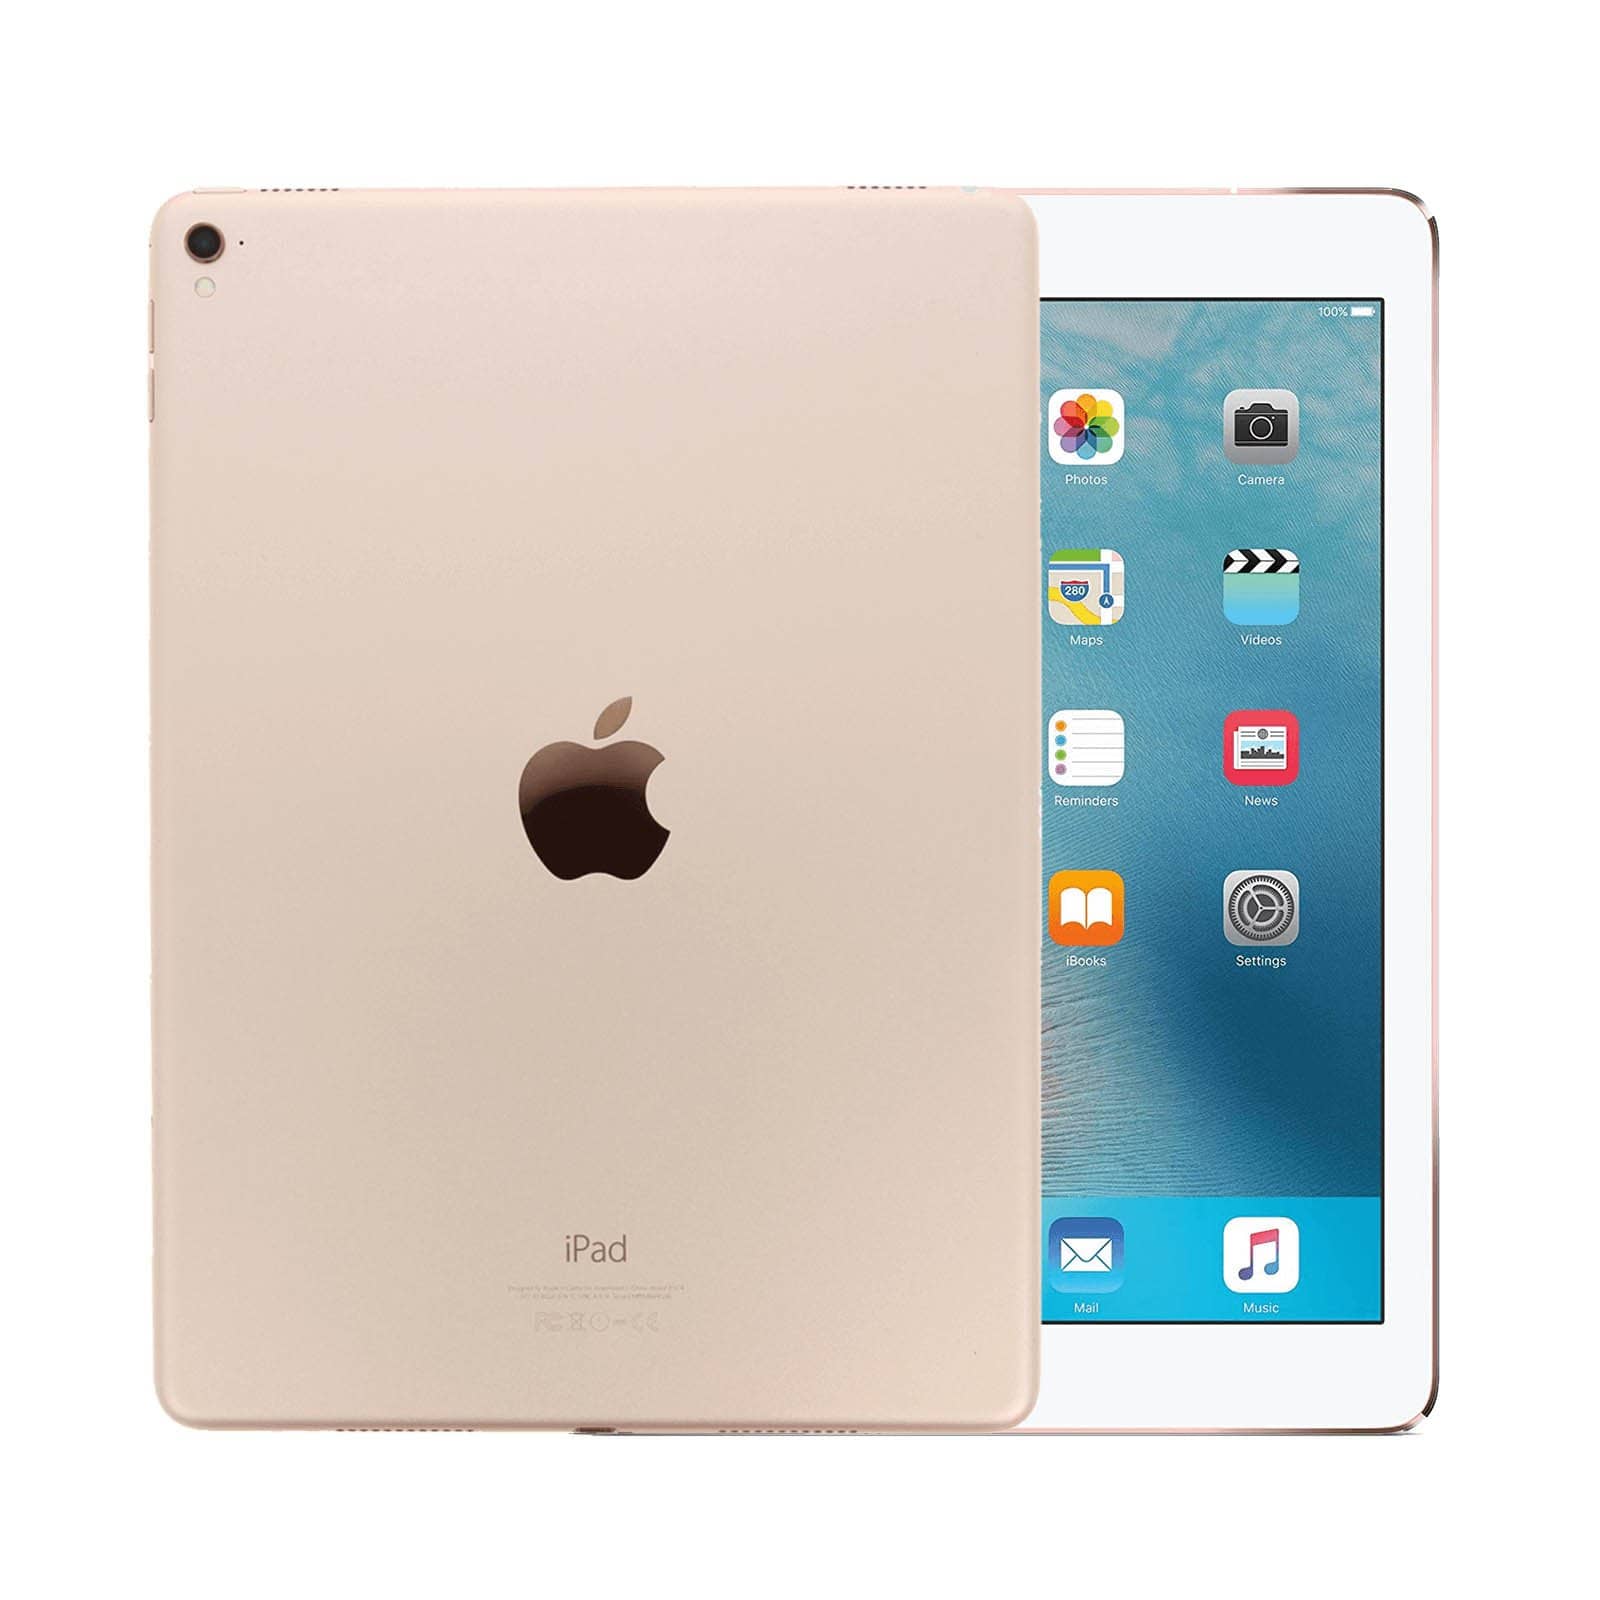 iPad Pro 9.7 Inch 32GB Gold Very Good - WiFi 32GB Gold Very Good